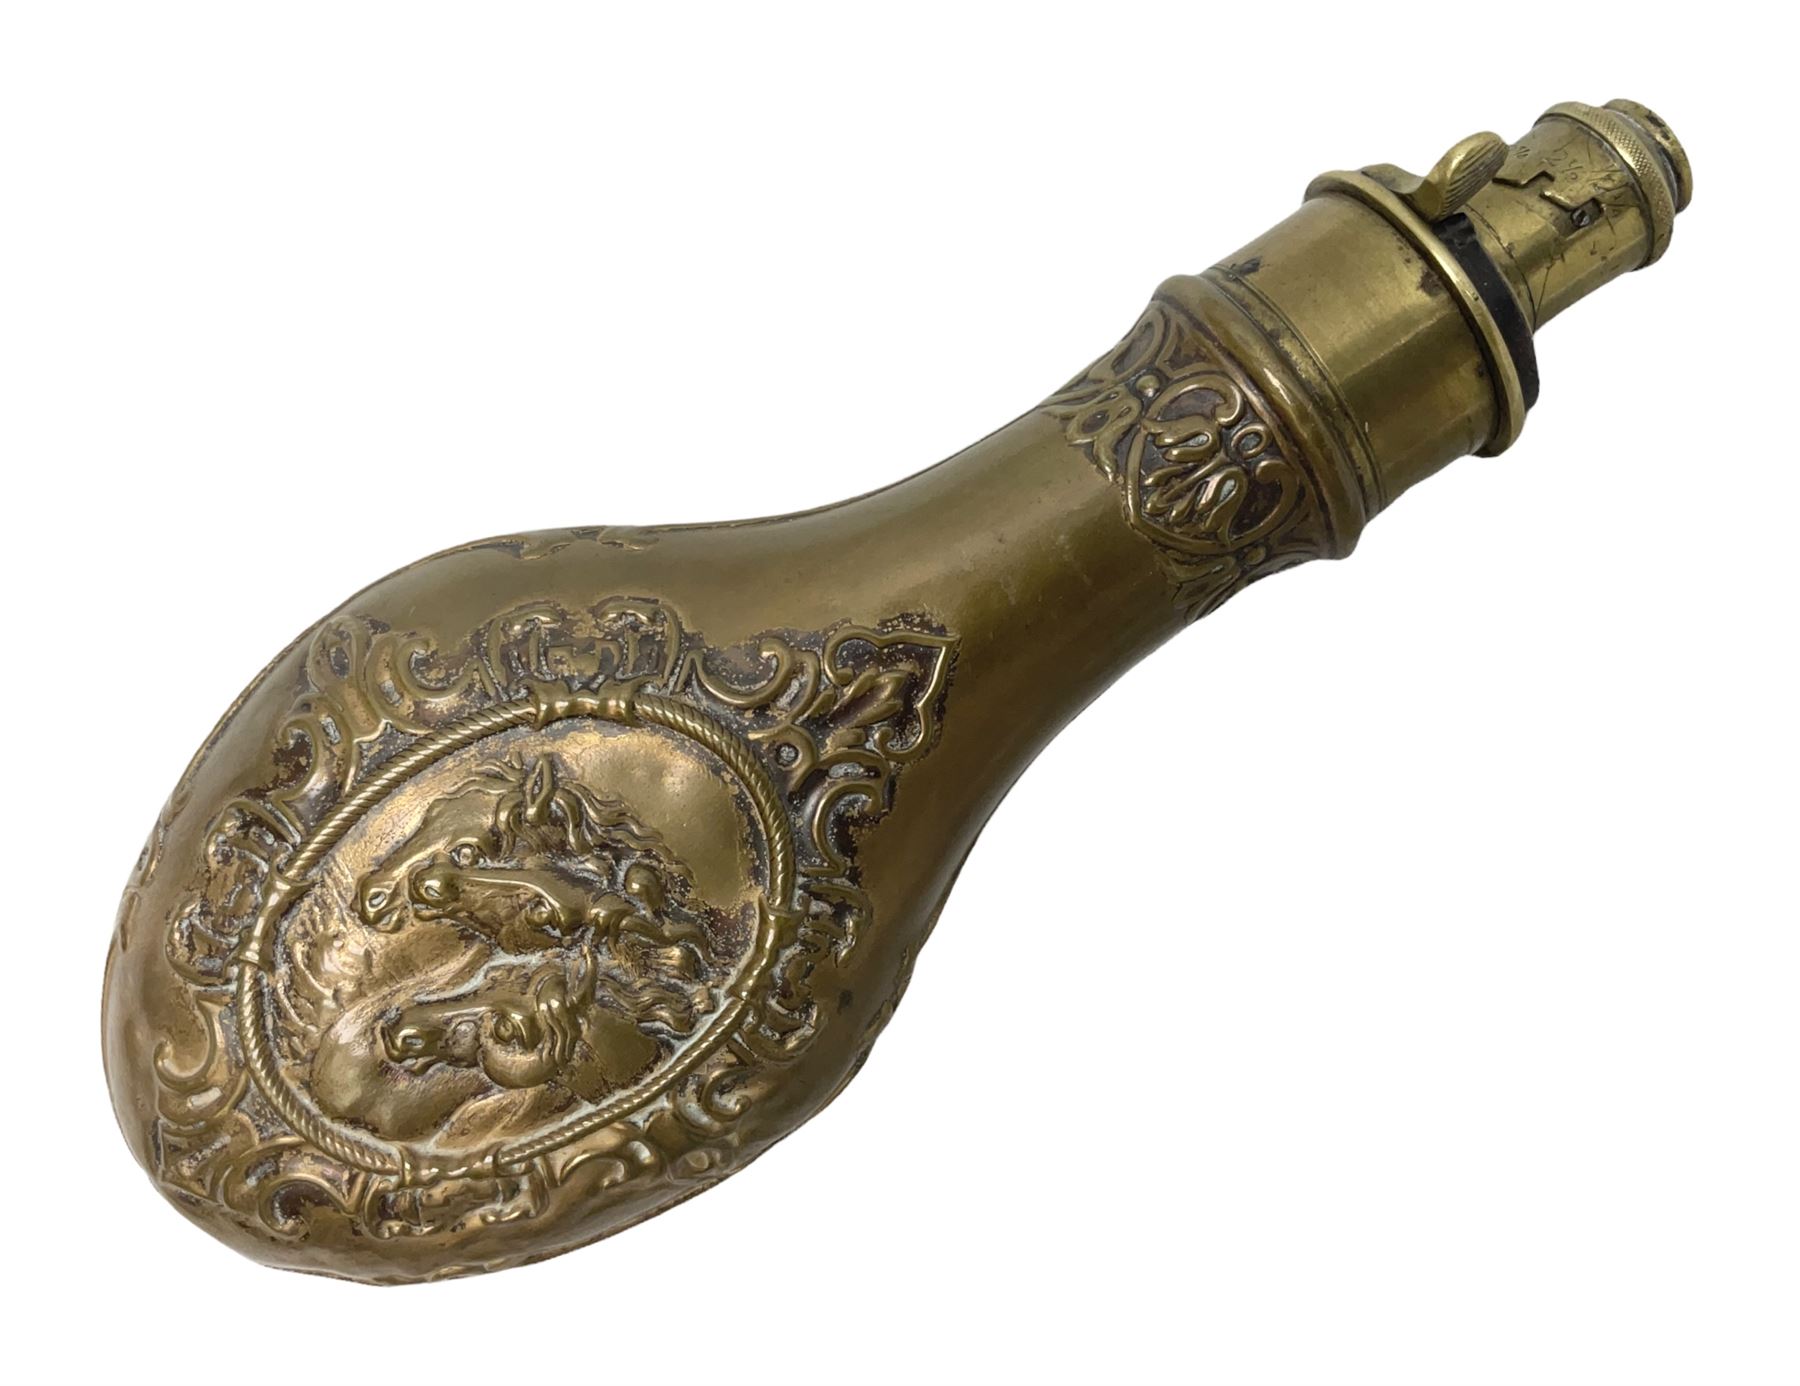 Copper and brass powder flask by G. & J.W. Hawksley Sheffield with